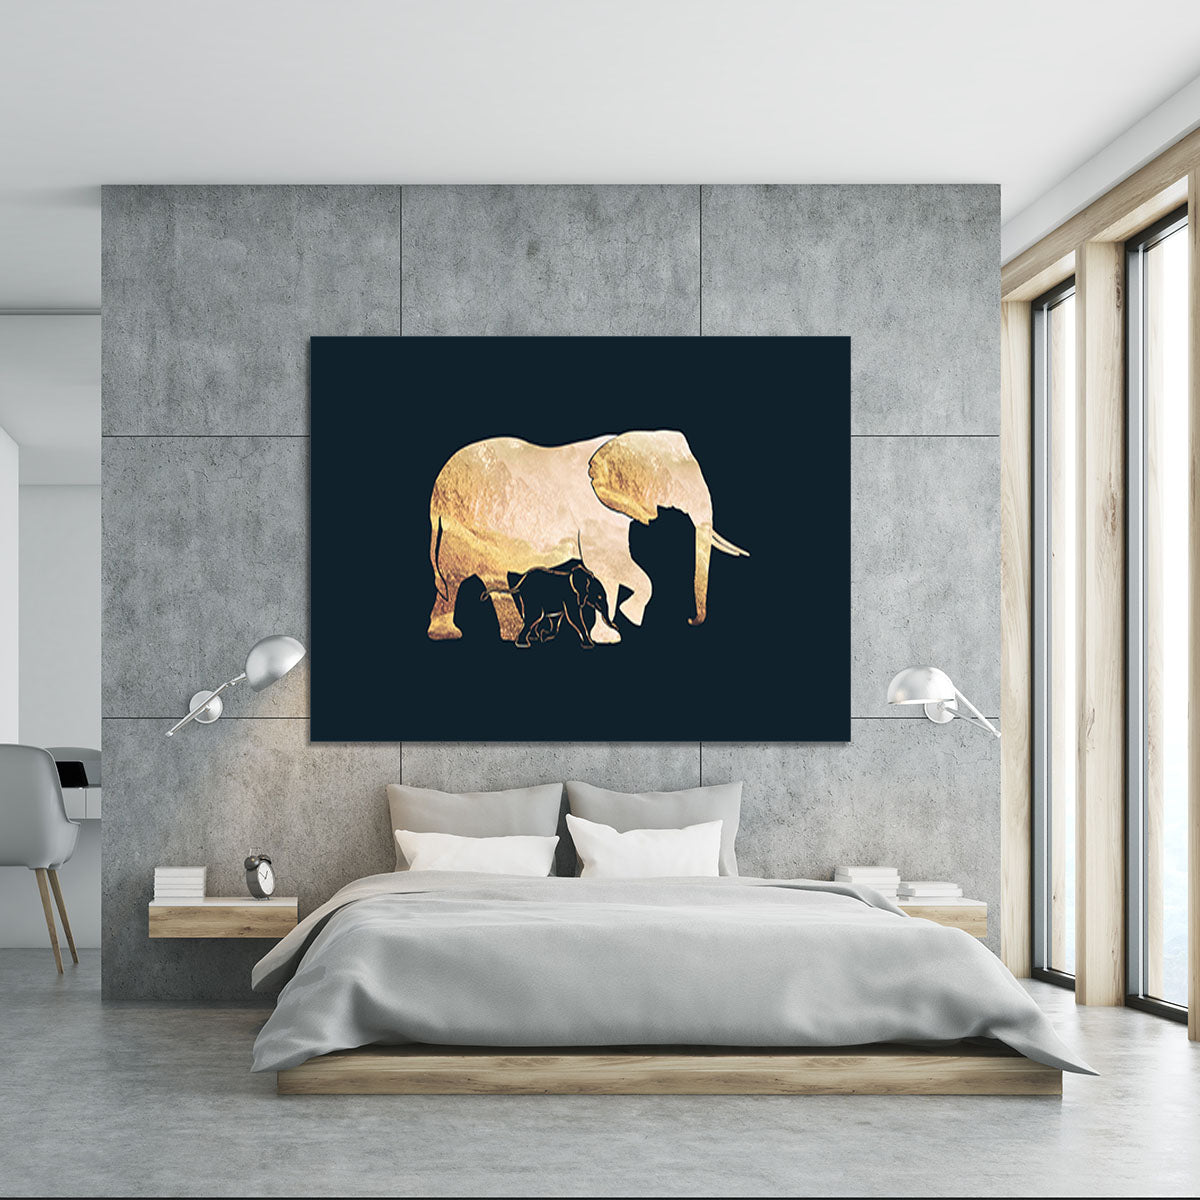 Black gold elephants 2 Canvas Print or Poster - 1x - 5